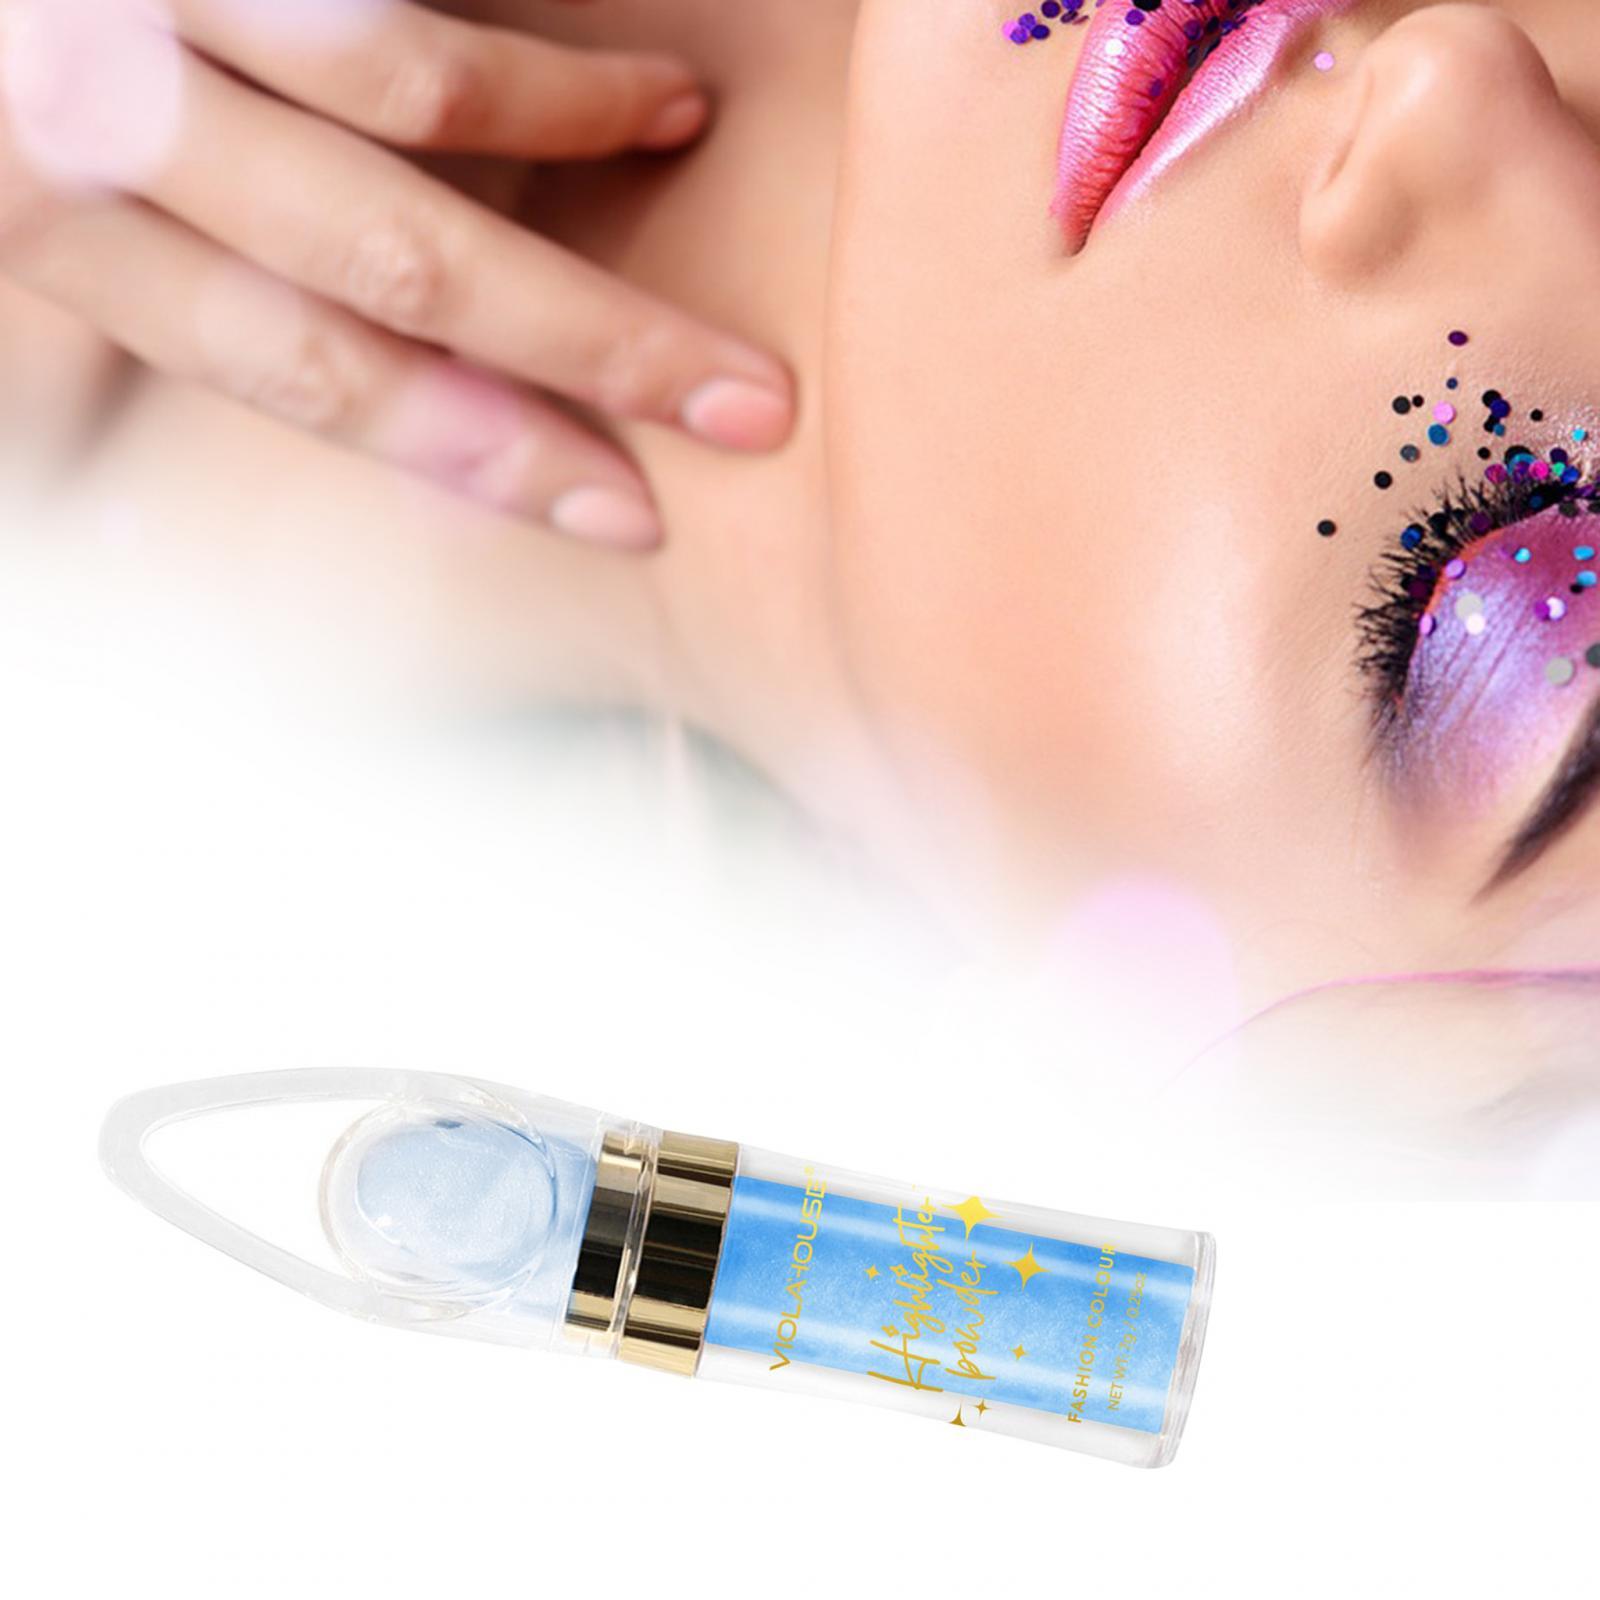 Highlight Stick Patting Powder Body Glitter for Club Festivals Night Parties blue